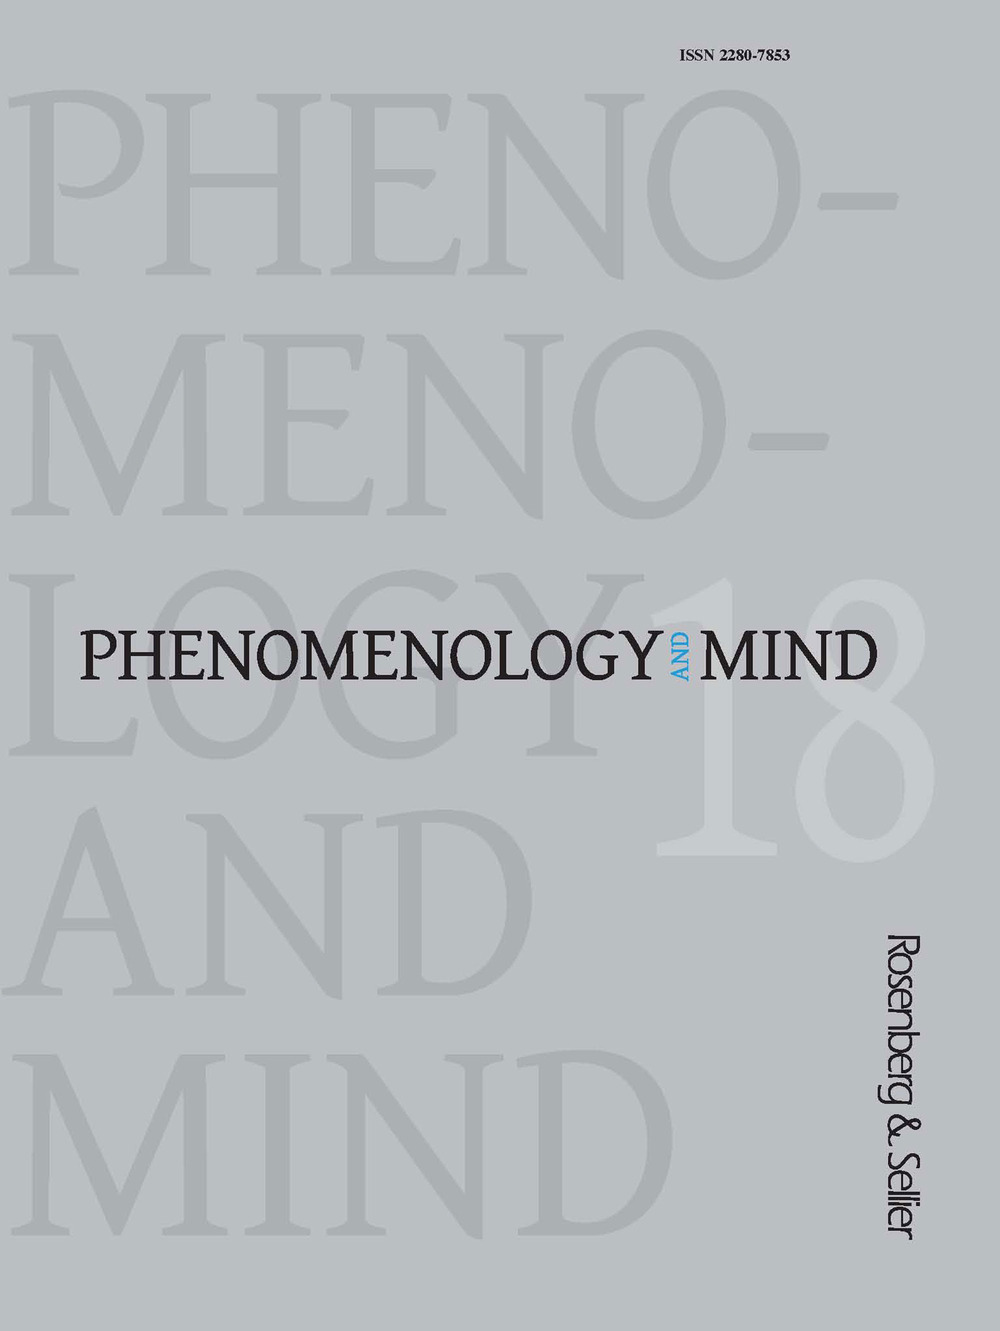 Phenomenology and mind (2020). Vol. 18: Psychopathology and phenomenology. Perspectives